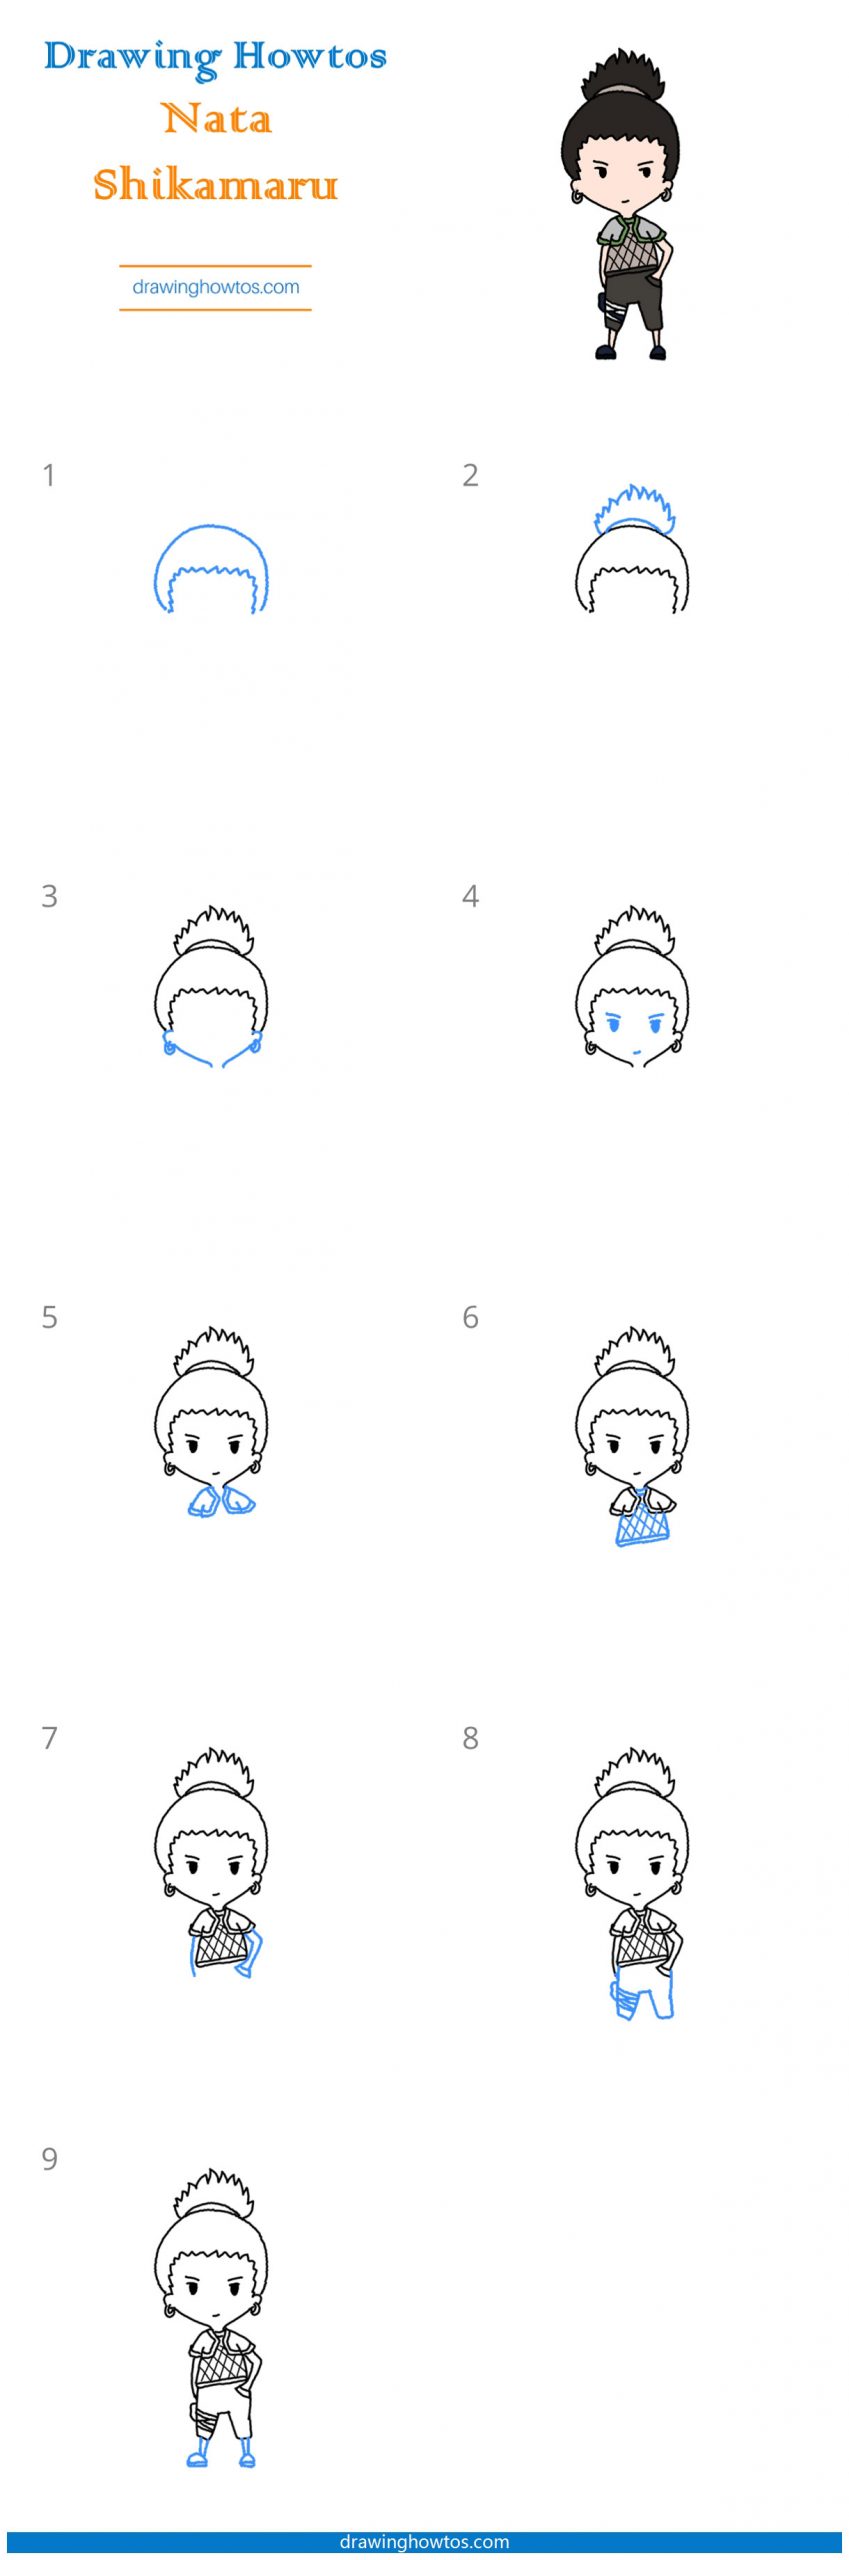 How to Draw Nata Shikamaru Step by Step